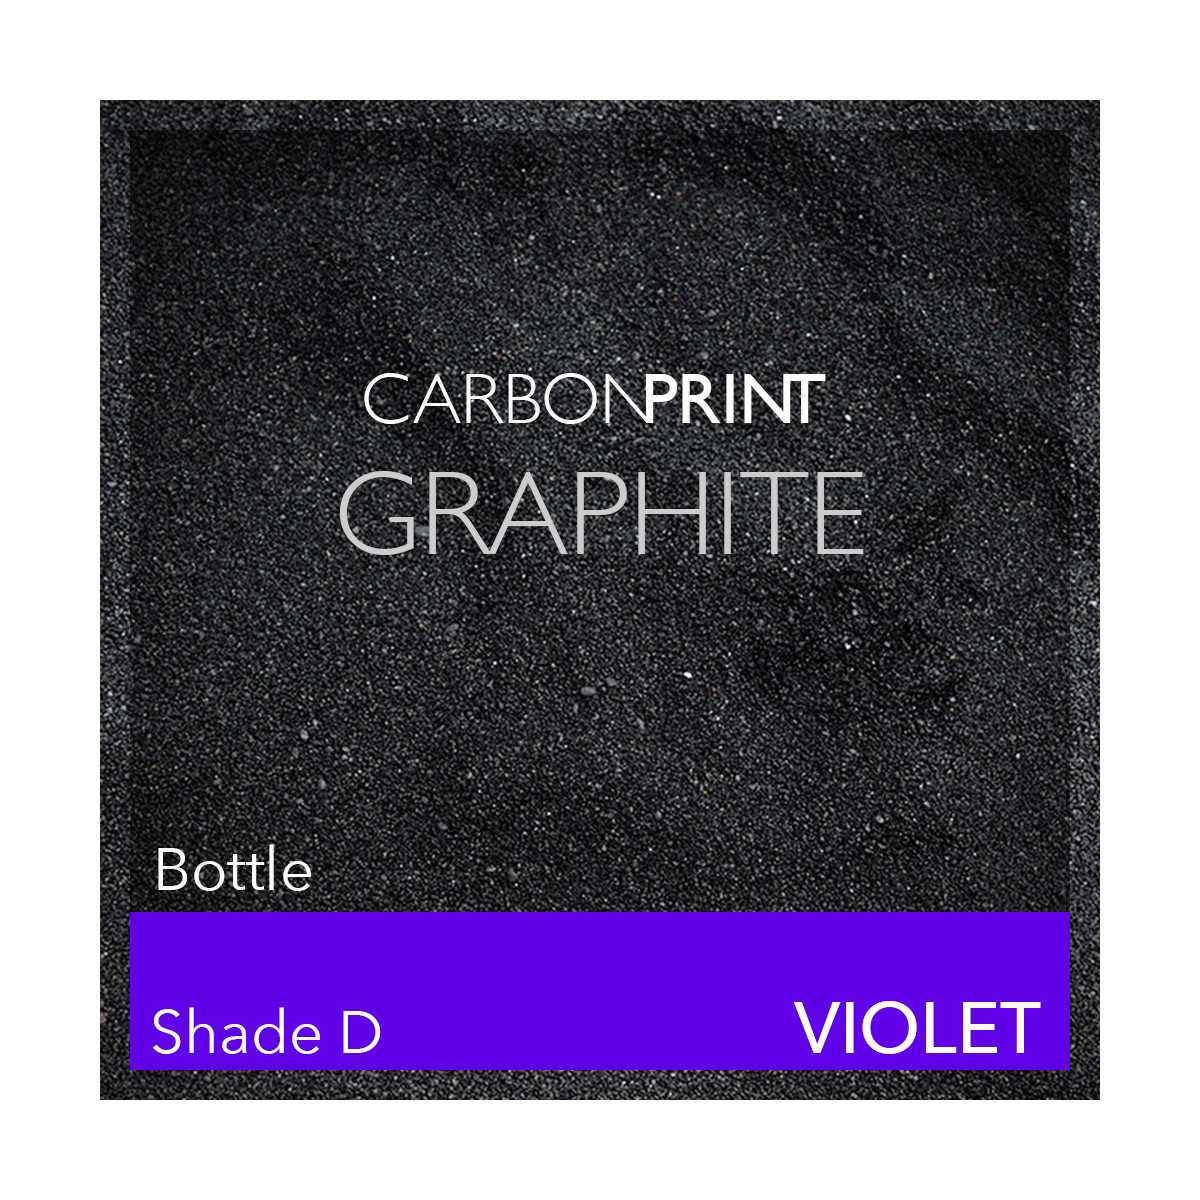 Carbonprint Graphite ShadeD Kanal Violet